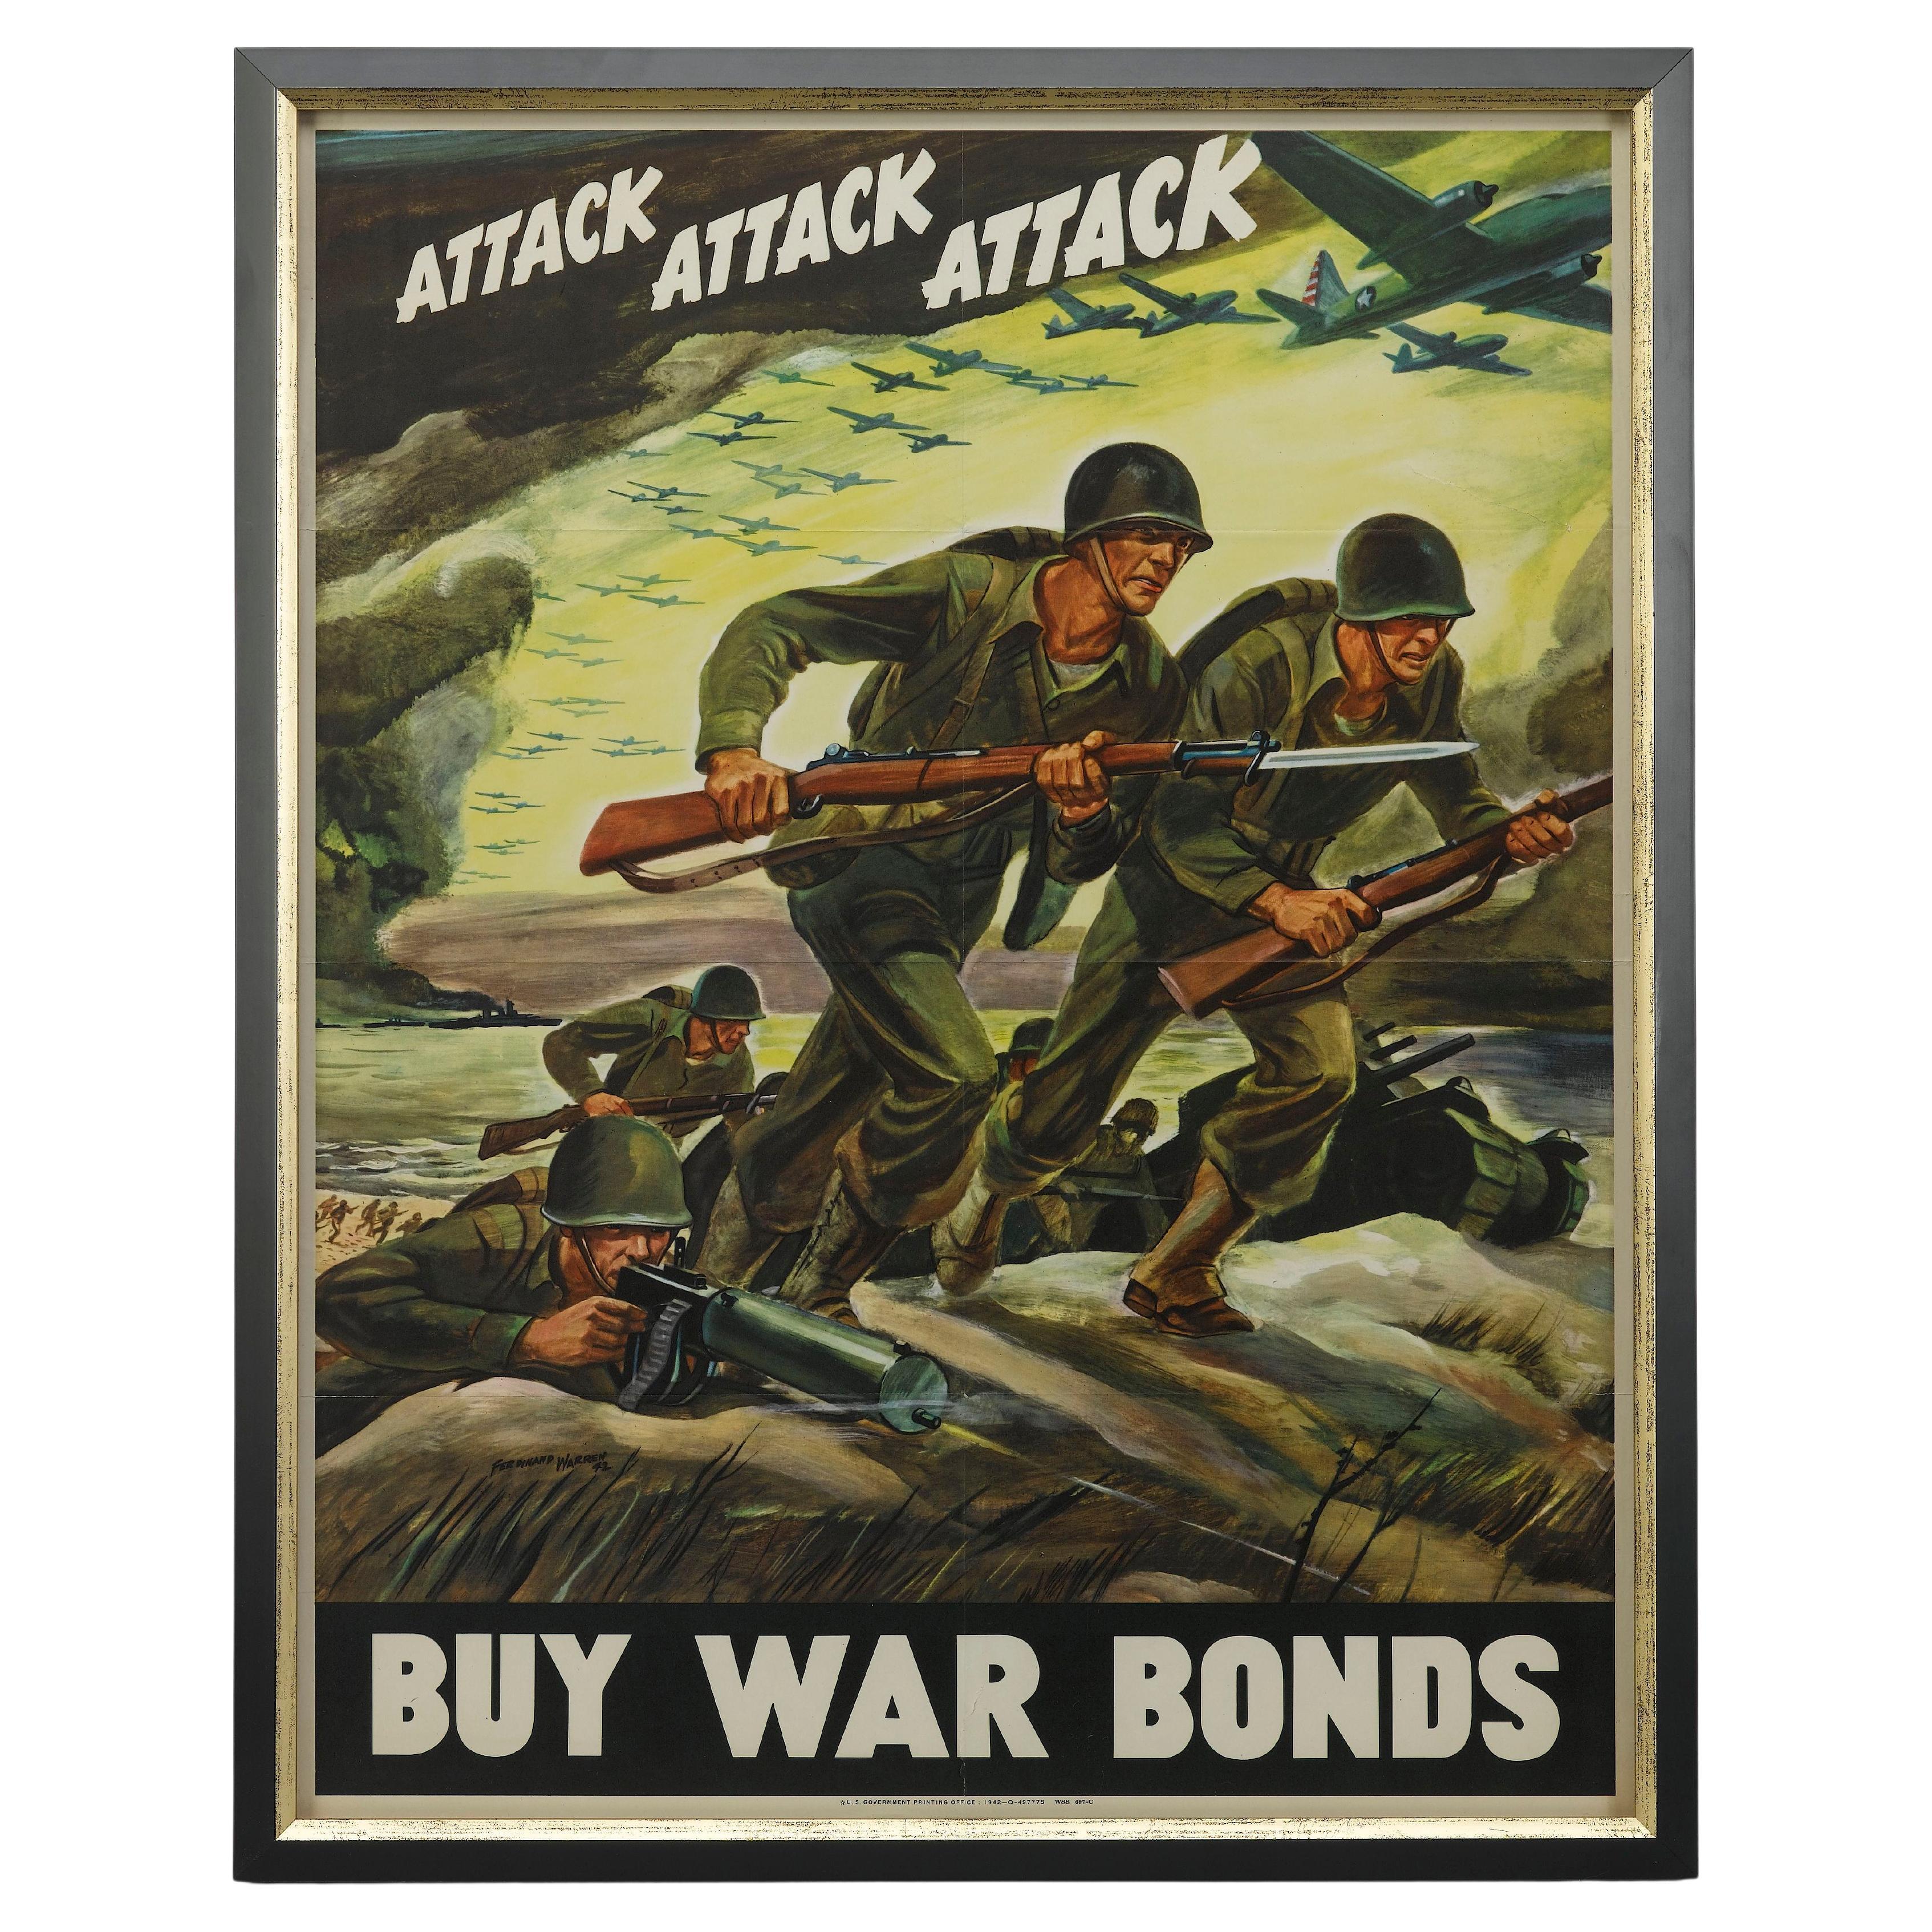 "Attack Attack Attack, Buy War Bonds" Vintage WWII Poster by F. Warren, 1942